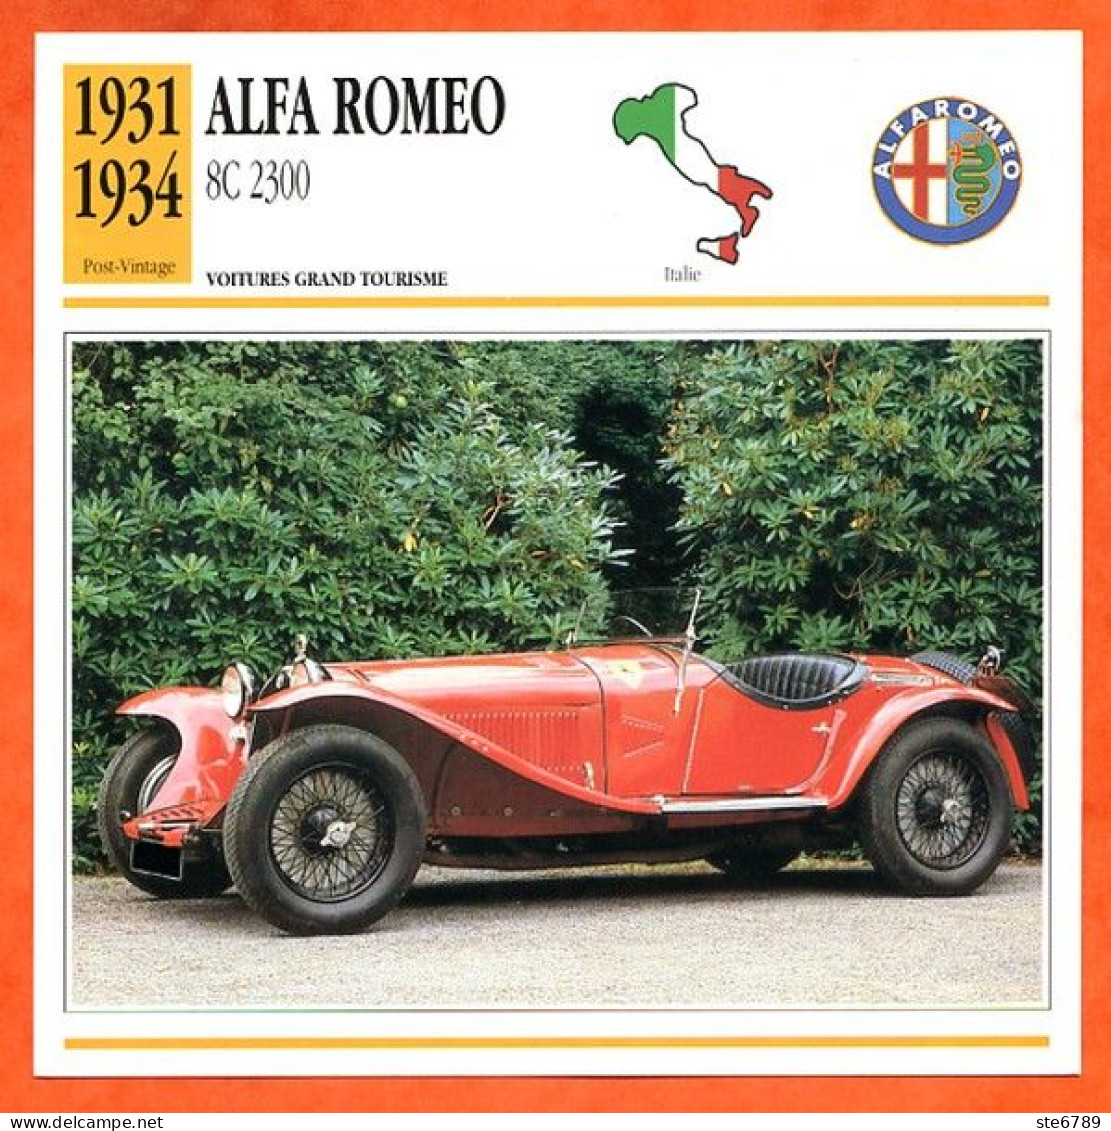 ALFA ROMEO 8C 2300 1931 Voiture Grand Tourisme Italie Fiche Technique Automobile - Autos